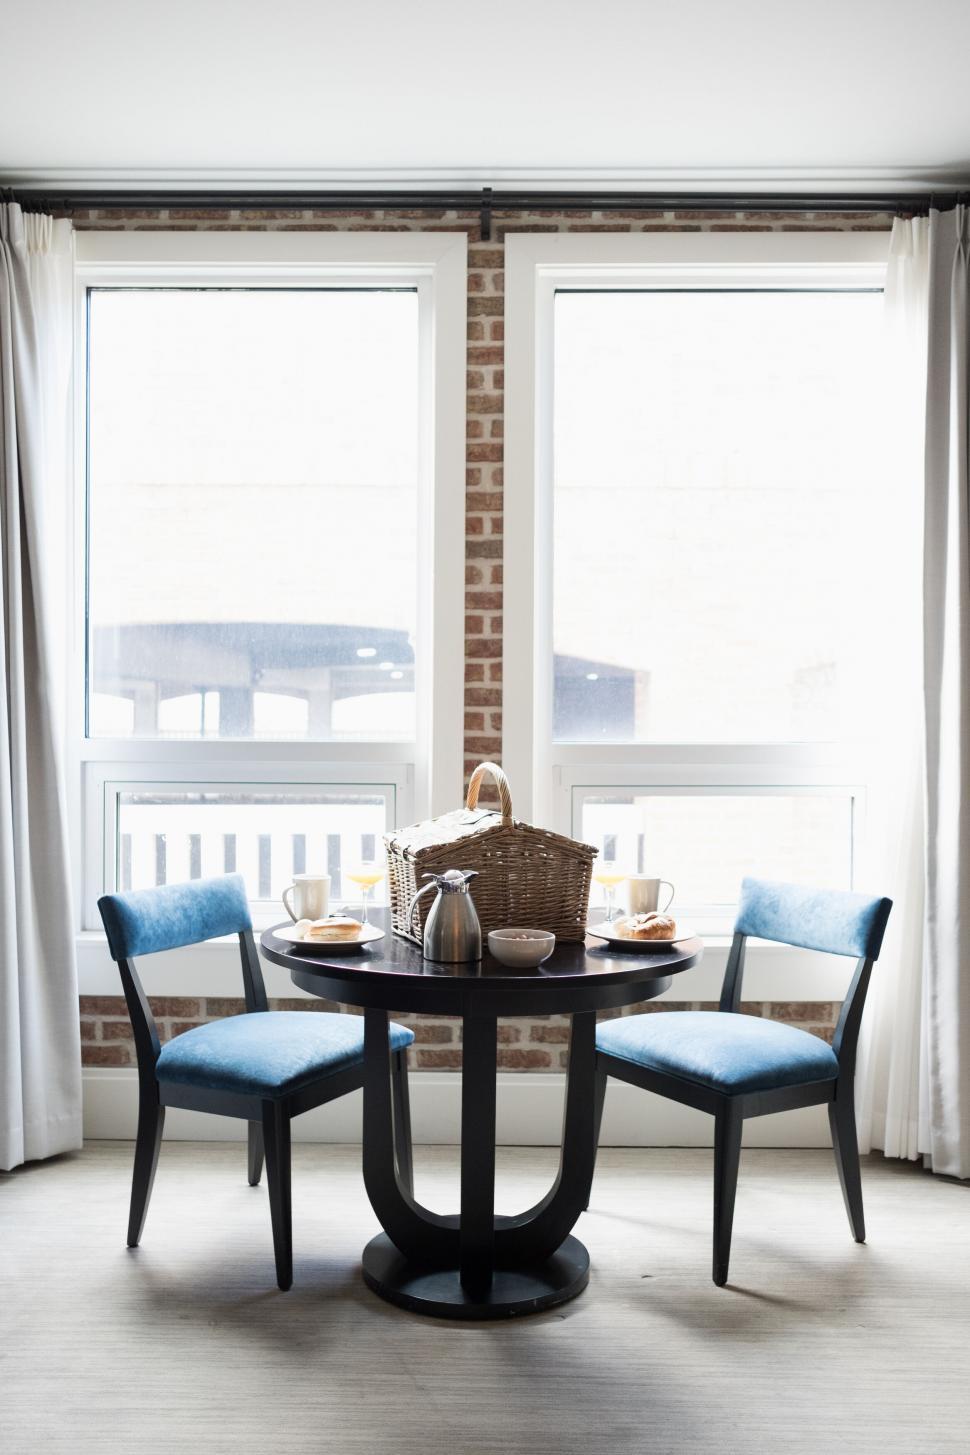 Free Image of Cozy modern dining room setup 